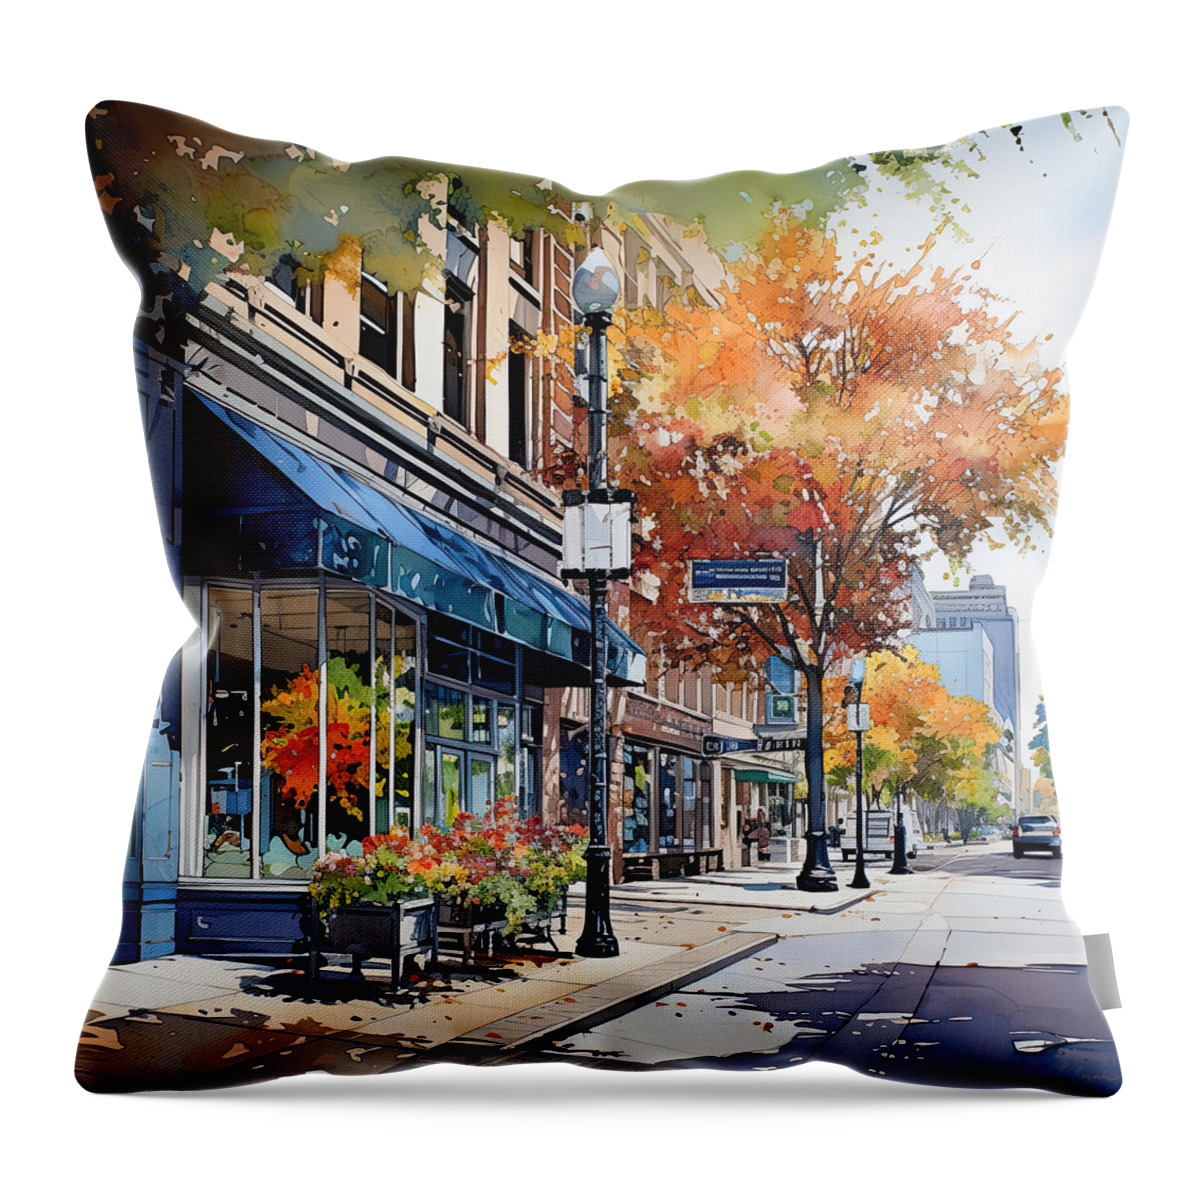 Hot Springs Arkansas Throw Pillow featuring the painting Hot Springs Arkansas Fall Foliage by Lourry Legarde